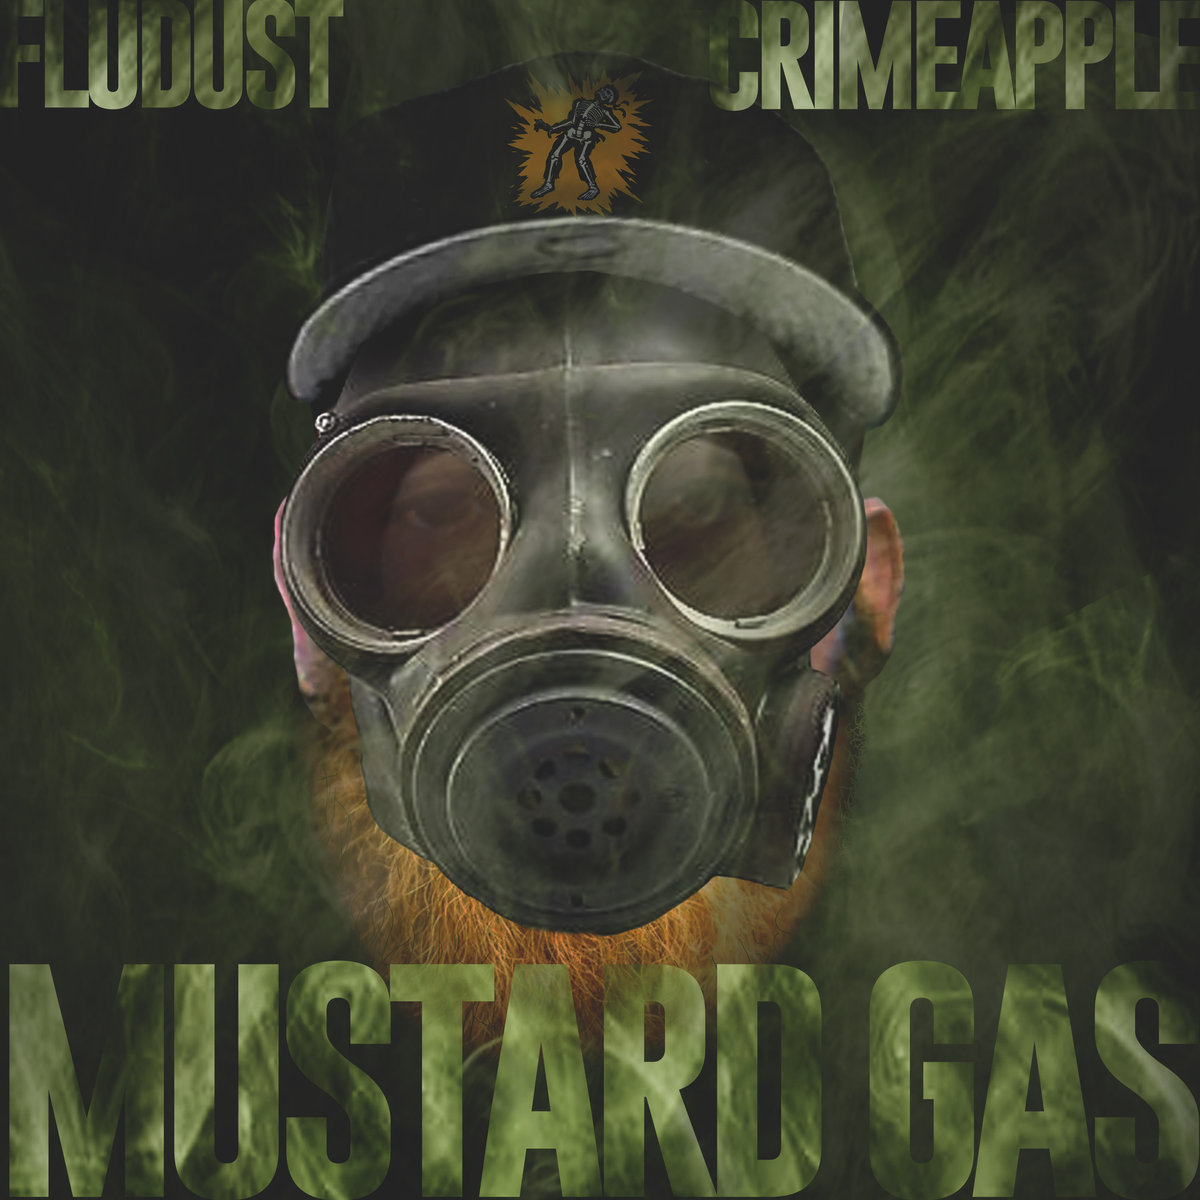 Mustard_gas_flus_crimeapple